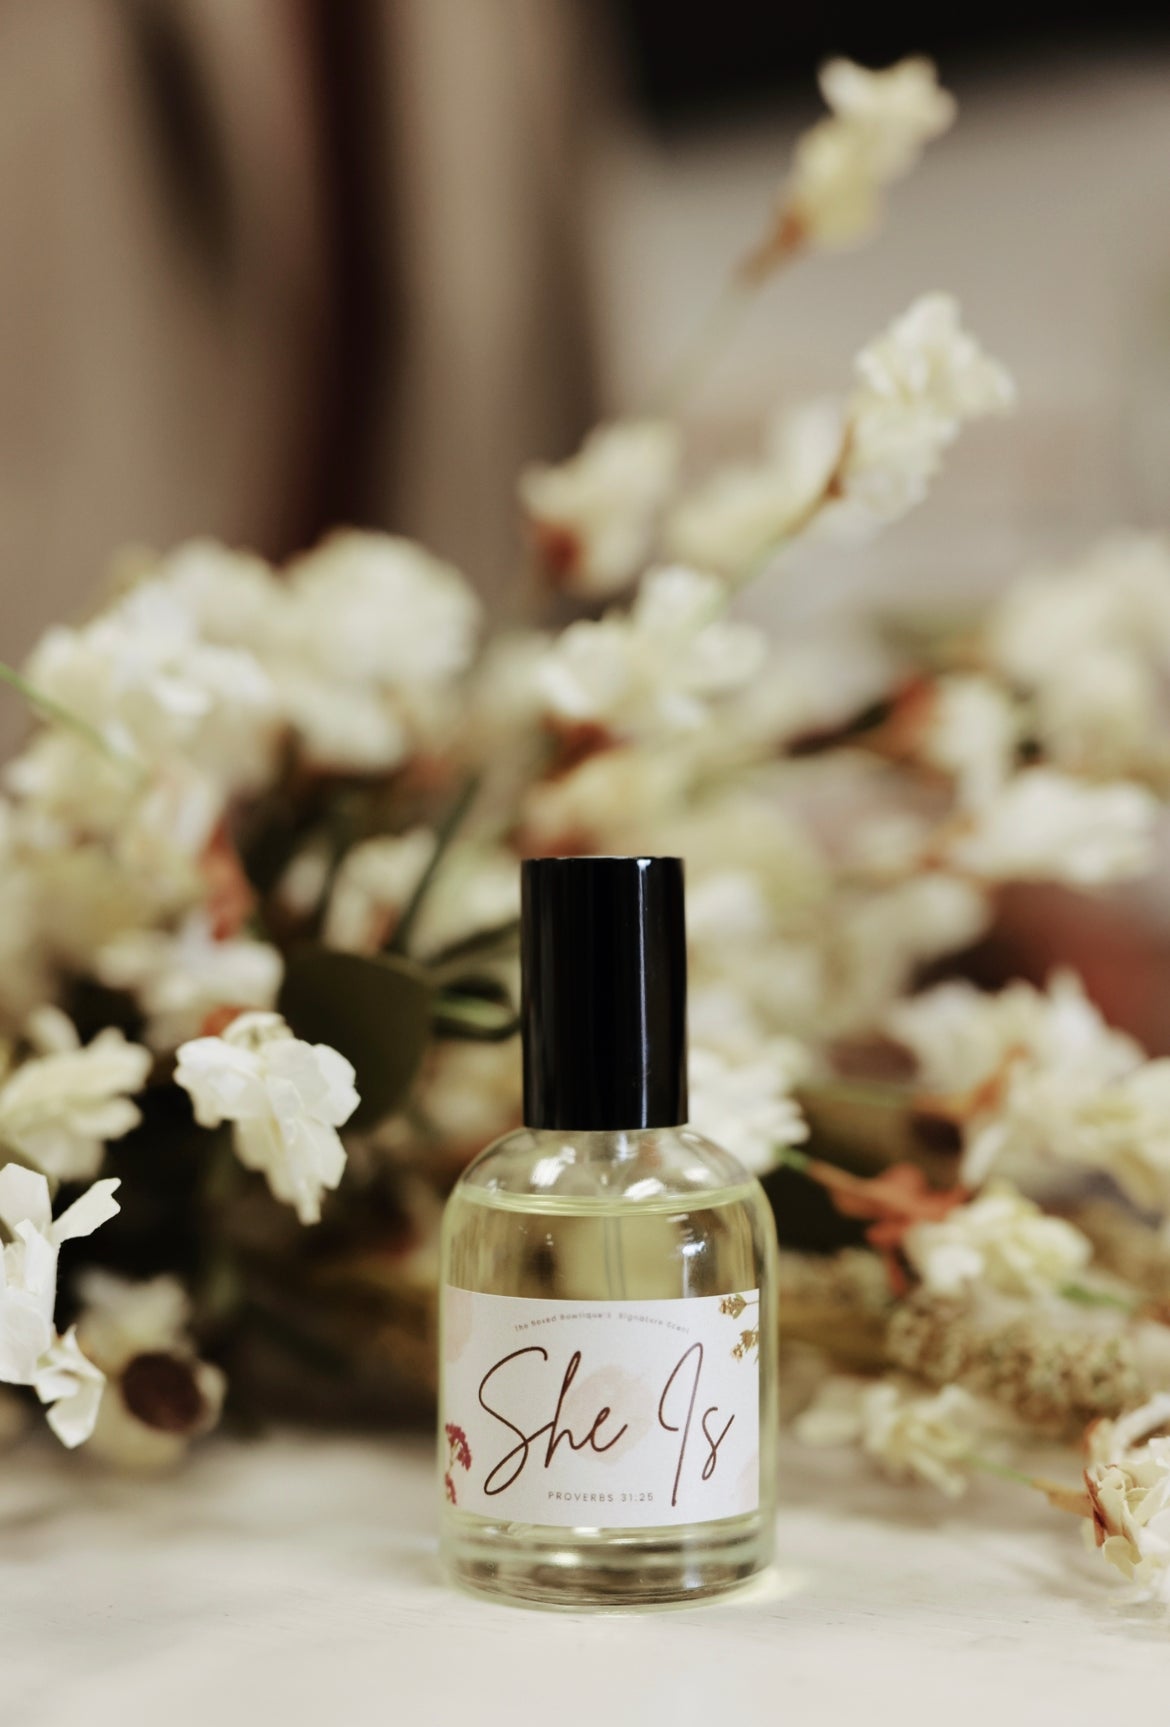 She Is-Lg. Bottle Perfume